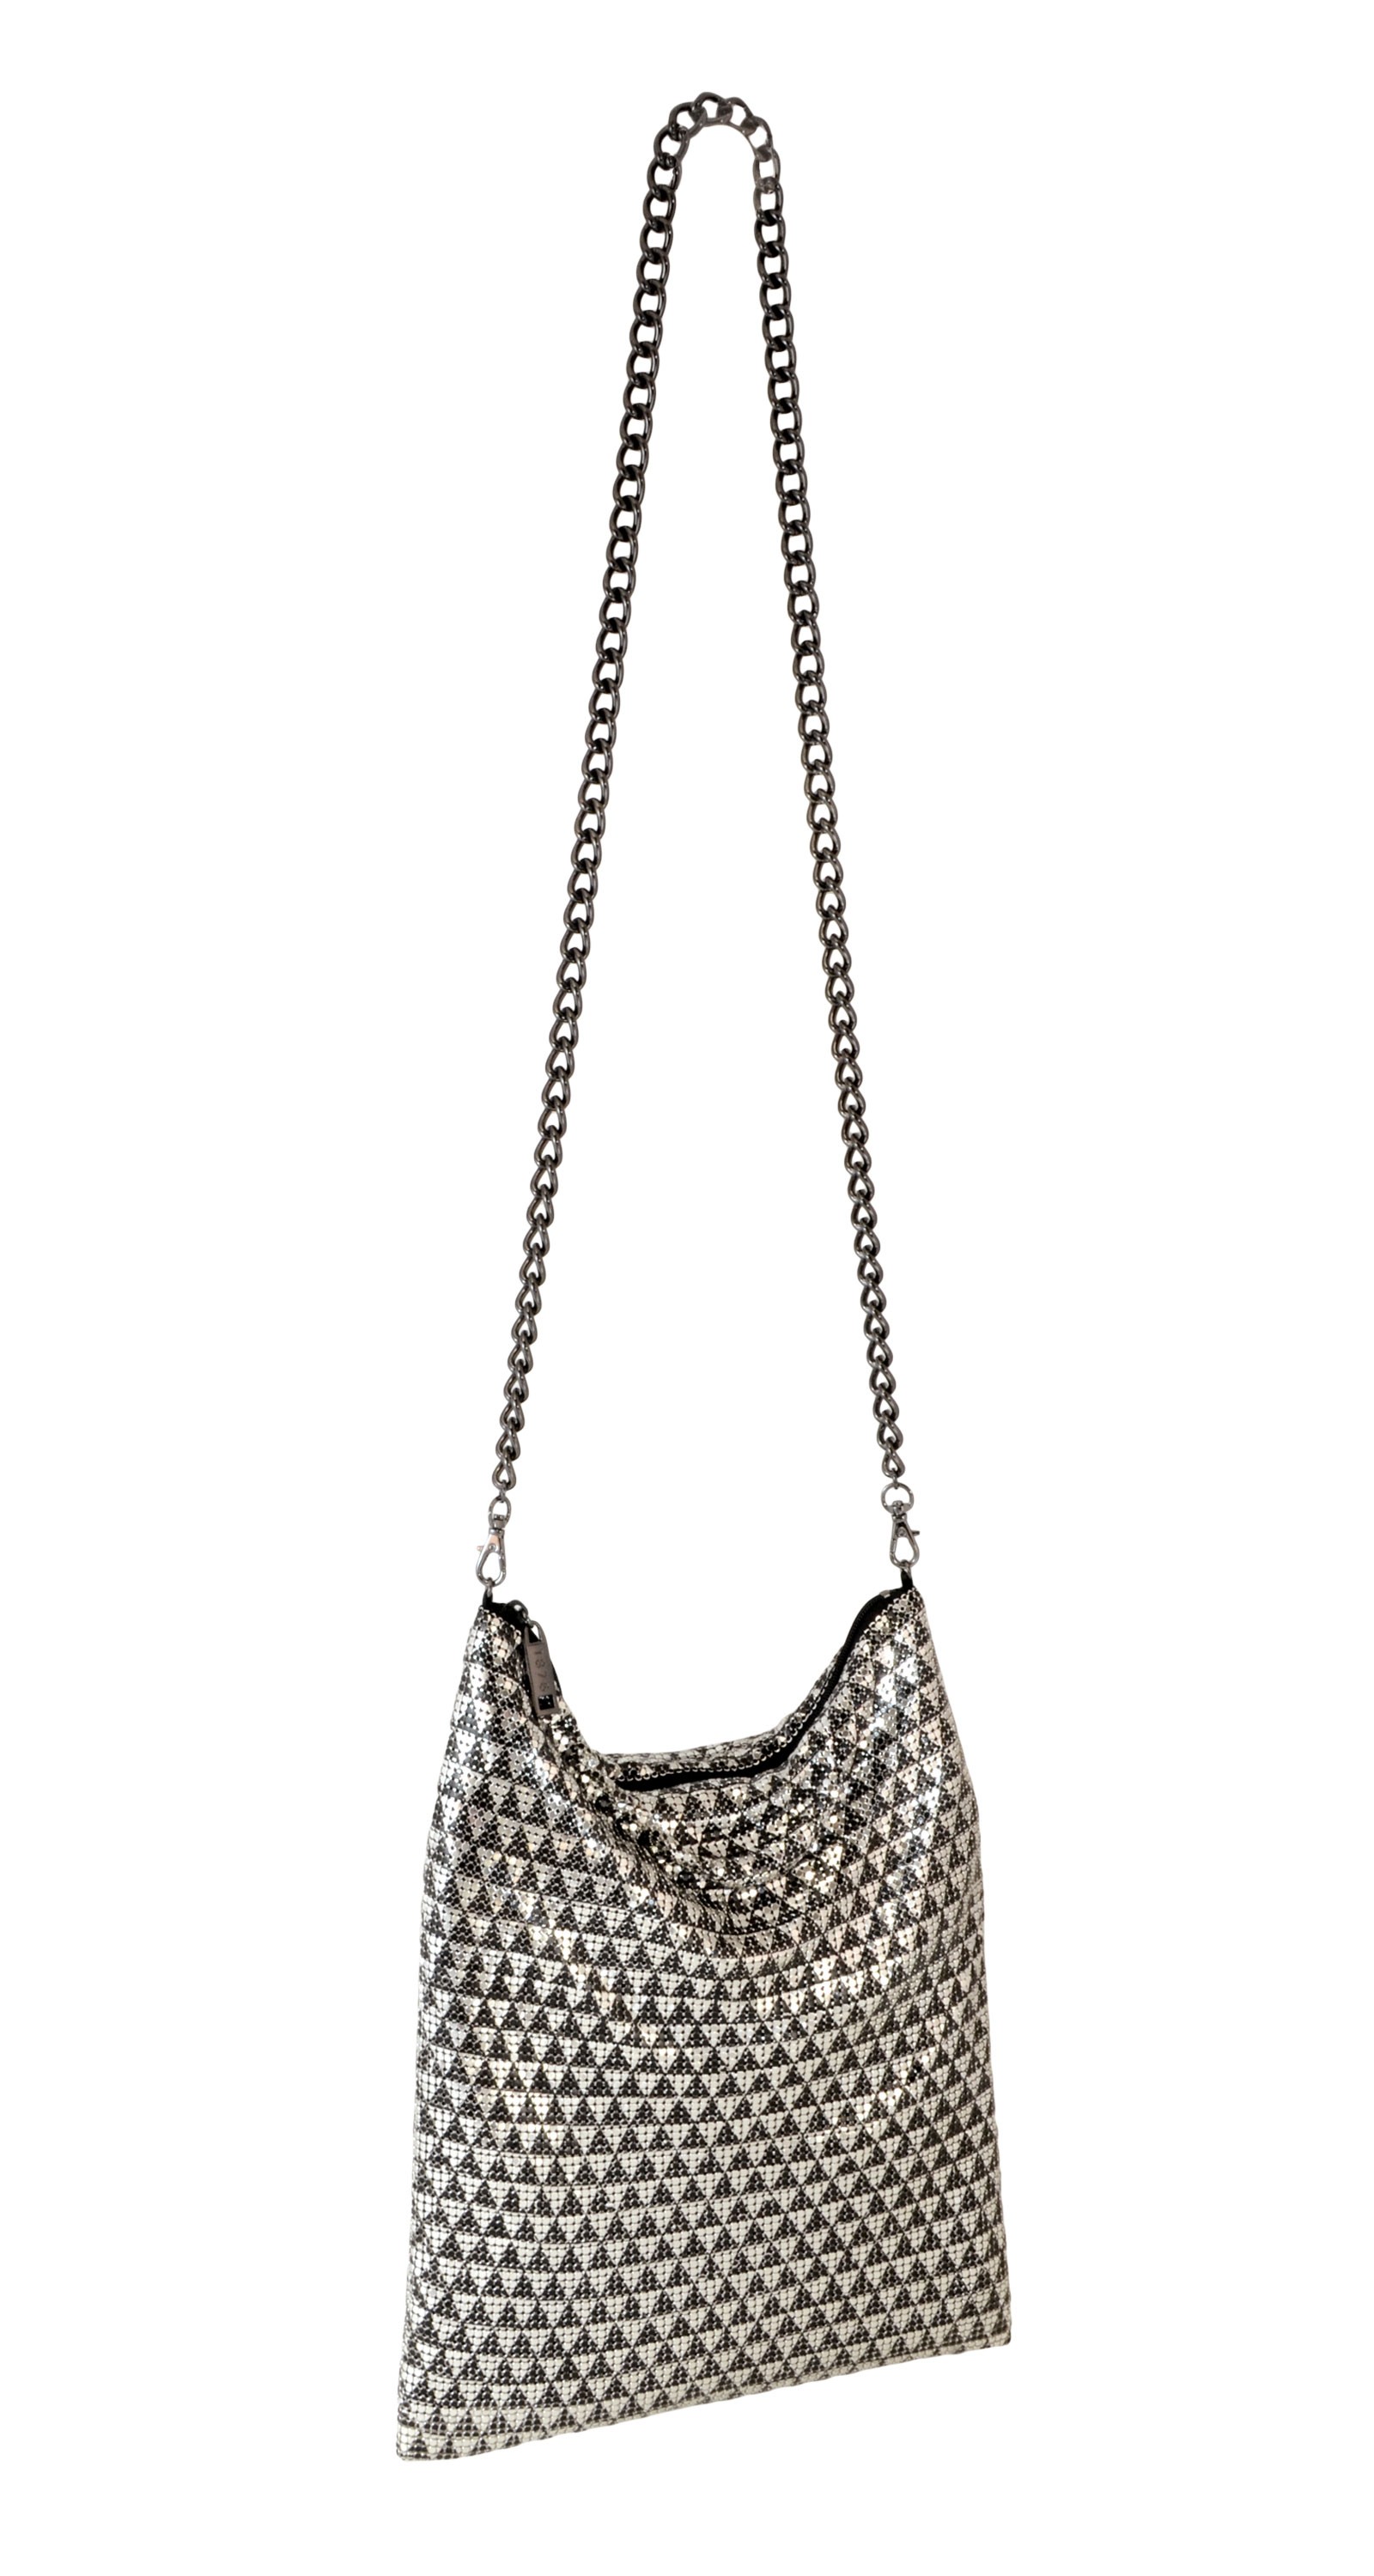 1-4203-bksv-black-silver-deco-triangles-convertible-crossbody-bag-stylish-shoulder-bag-contemporary-handbag